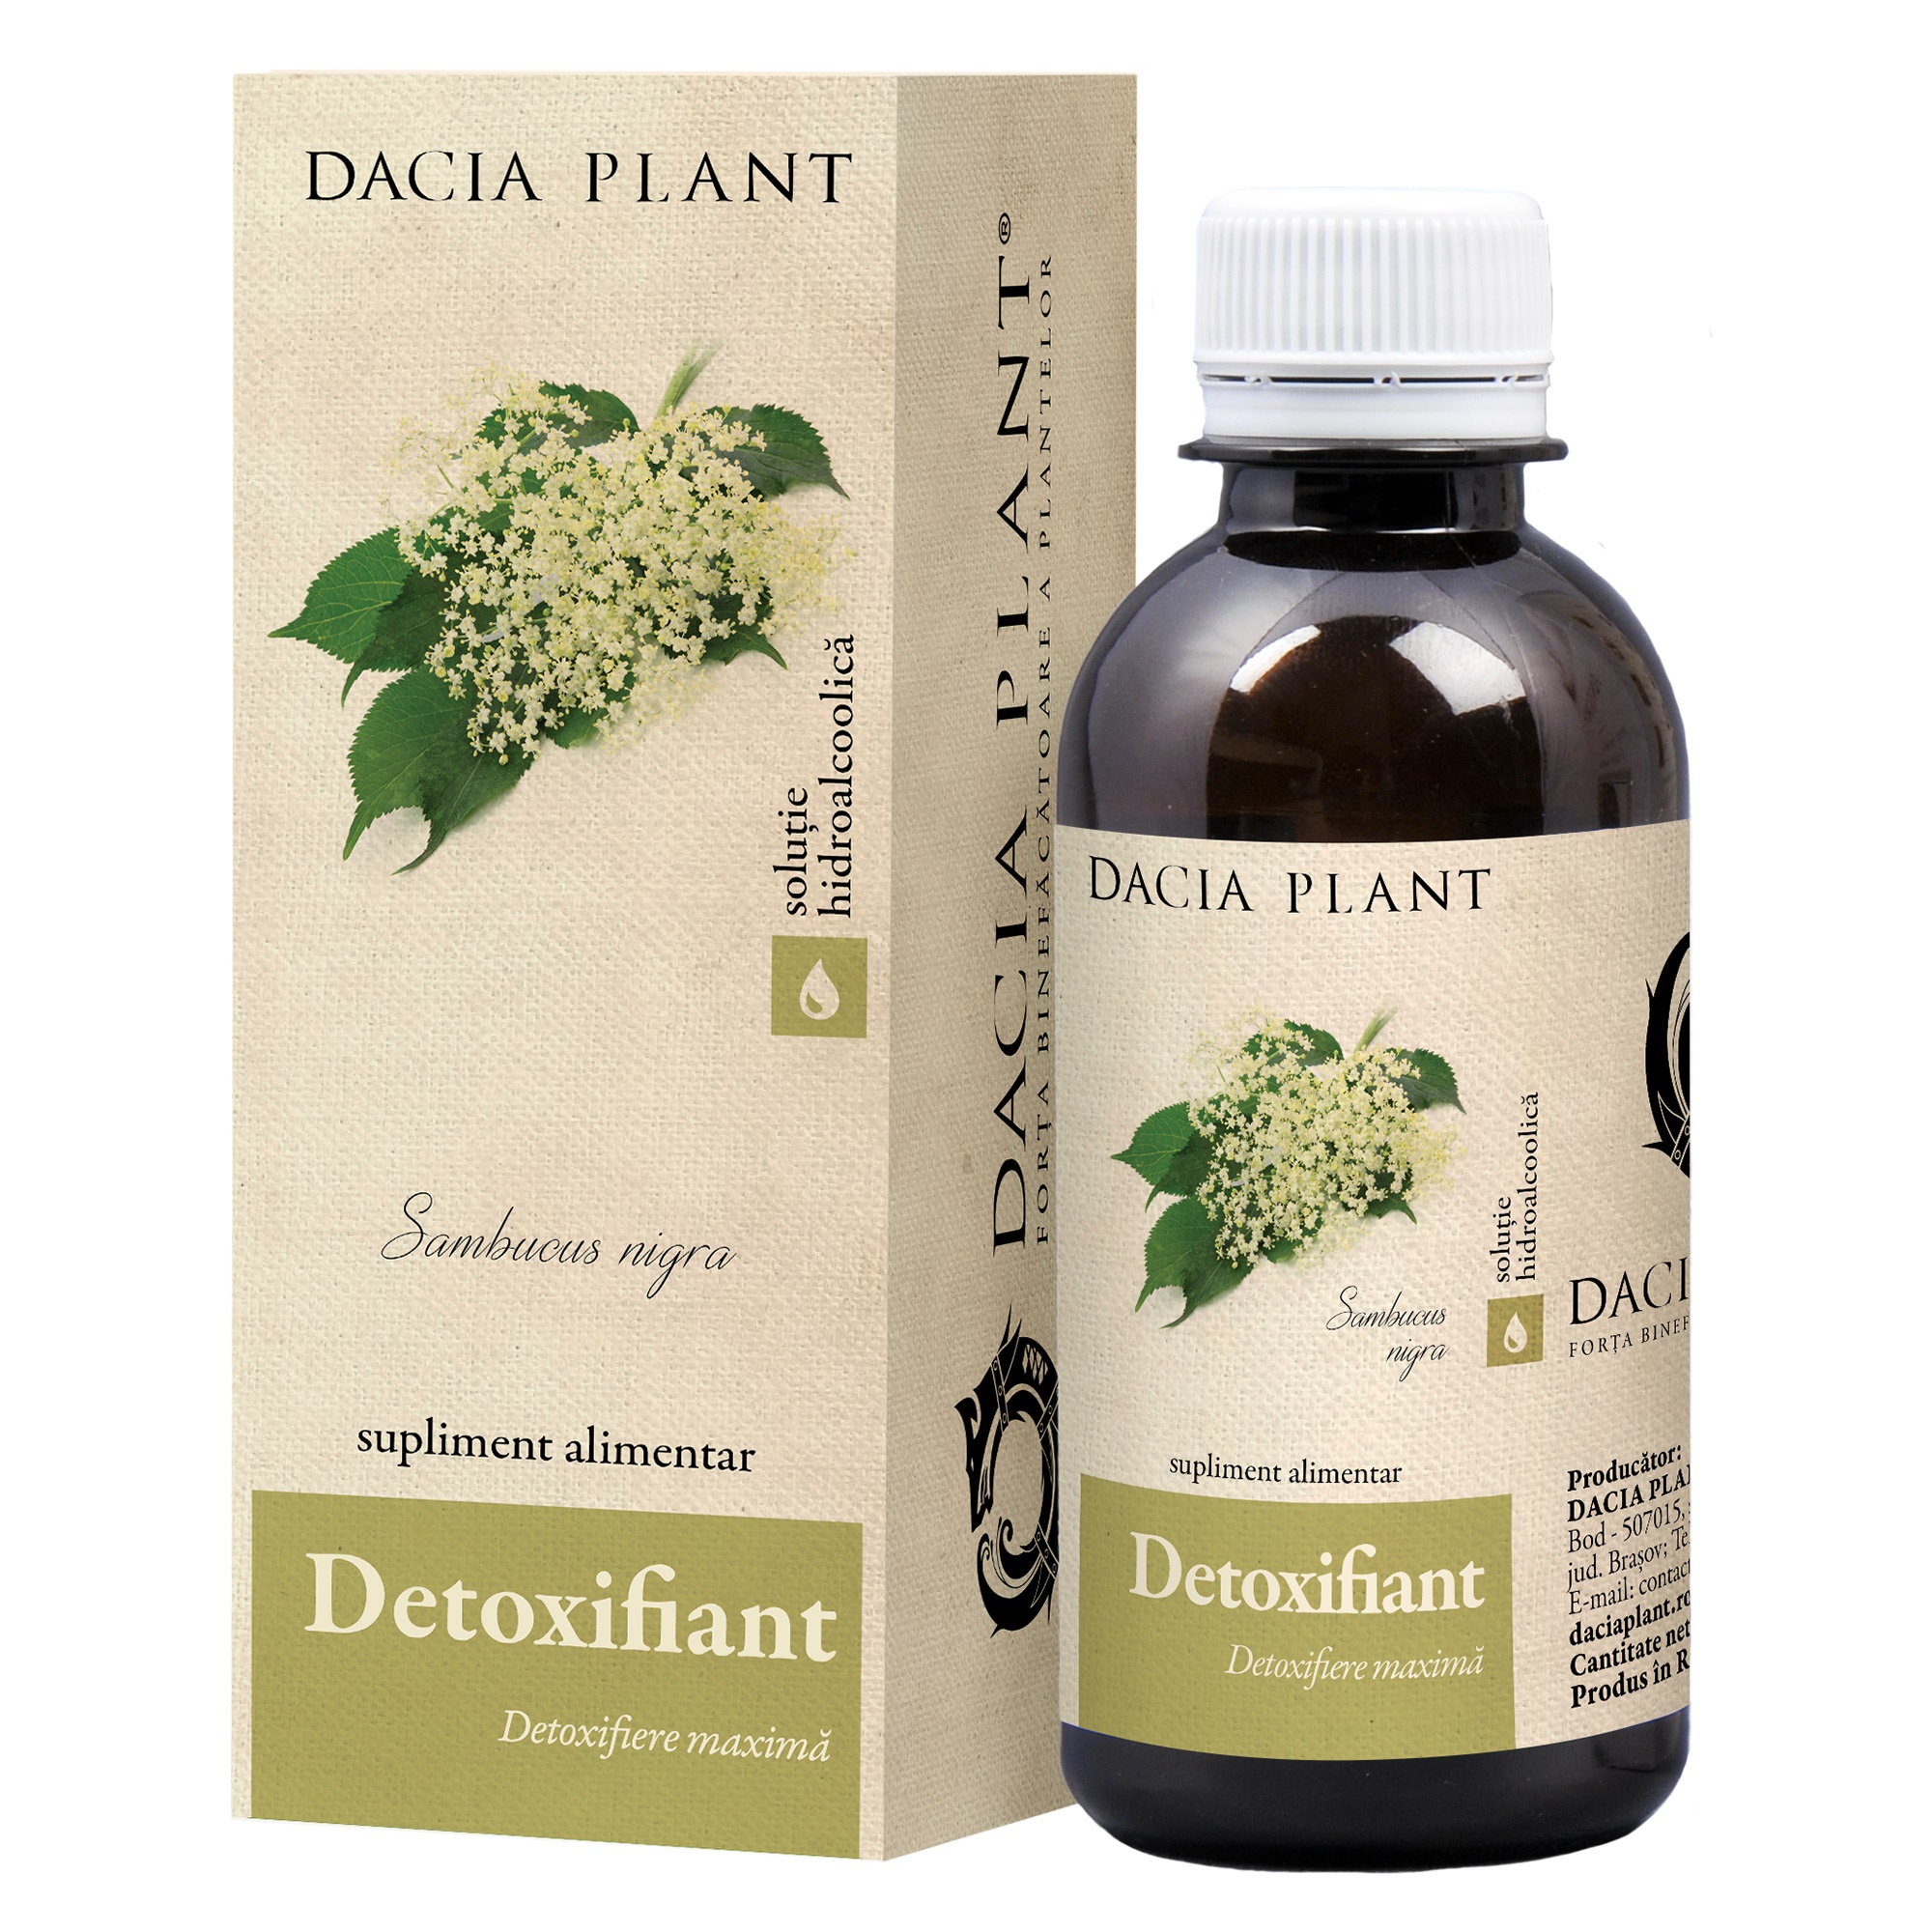 dacia plant detoxifiant)